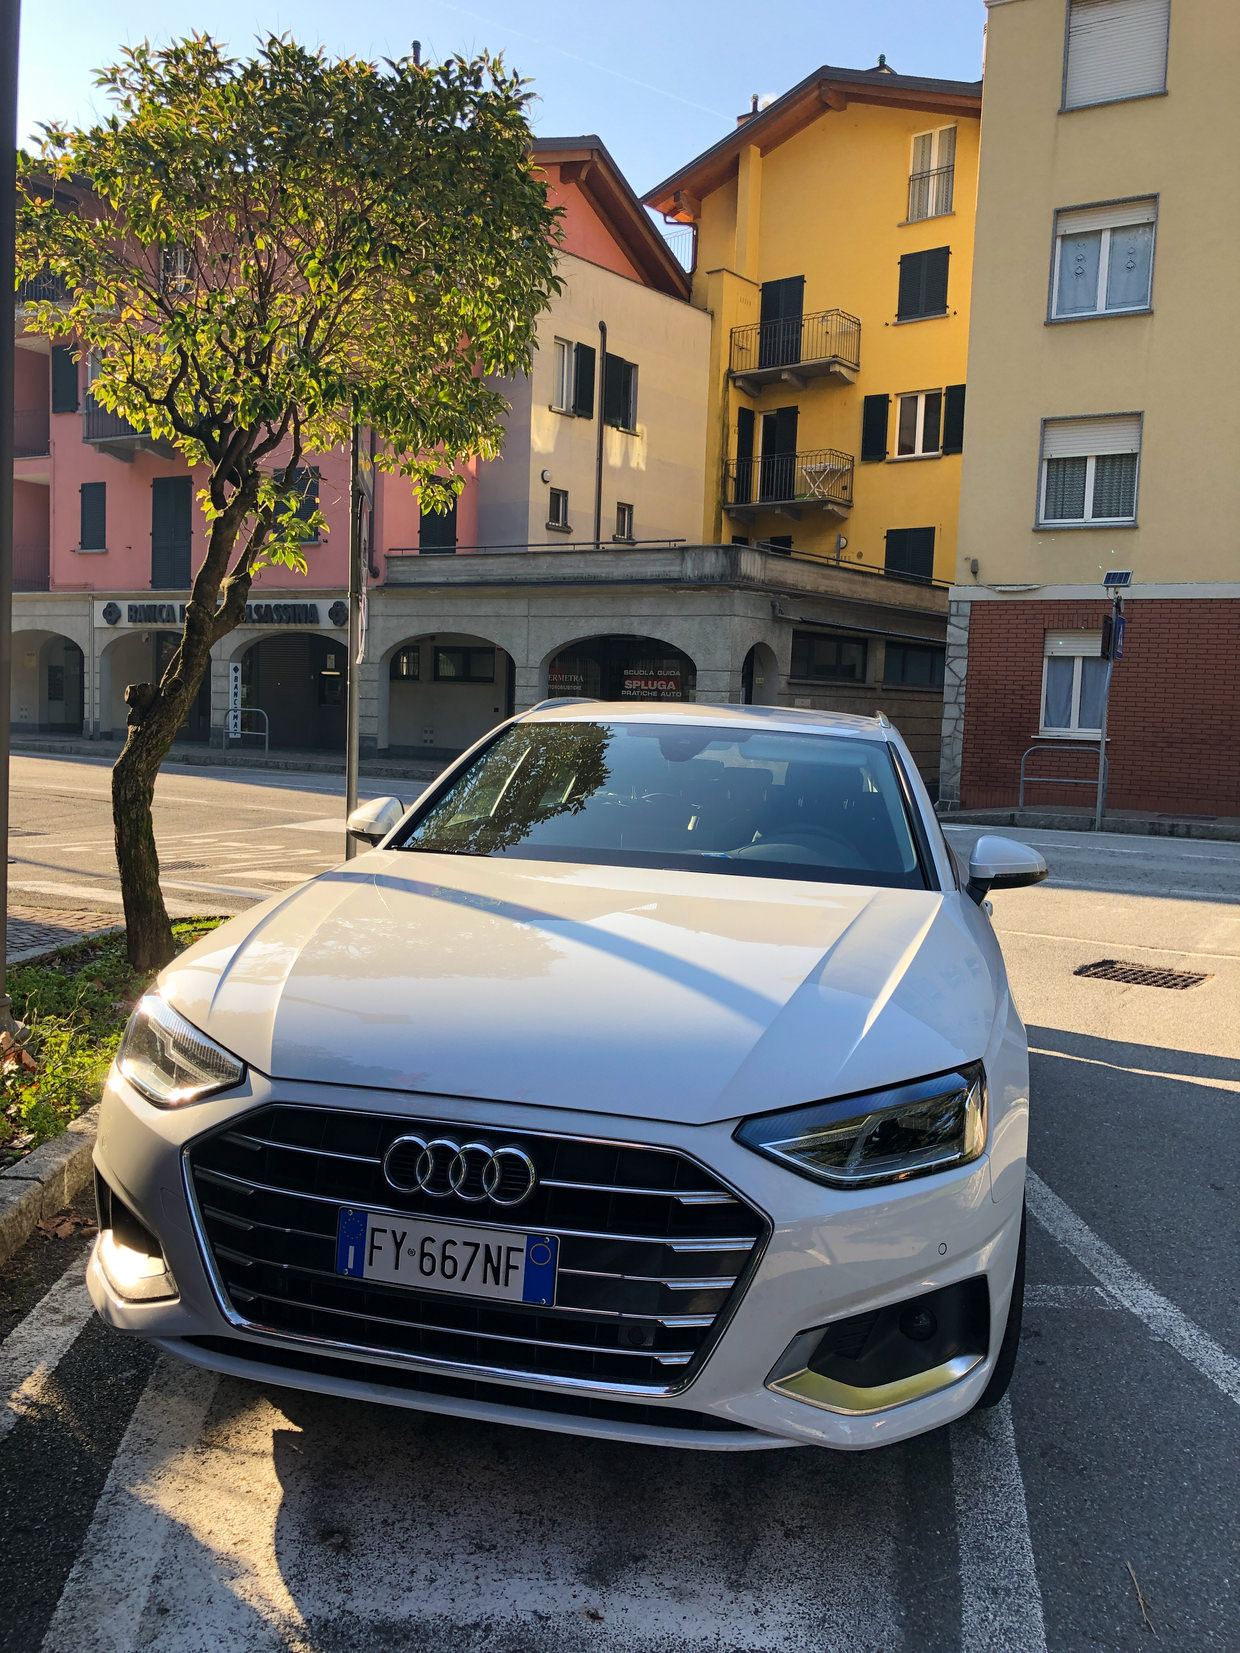 Our car rental, near Lake Como